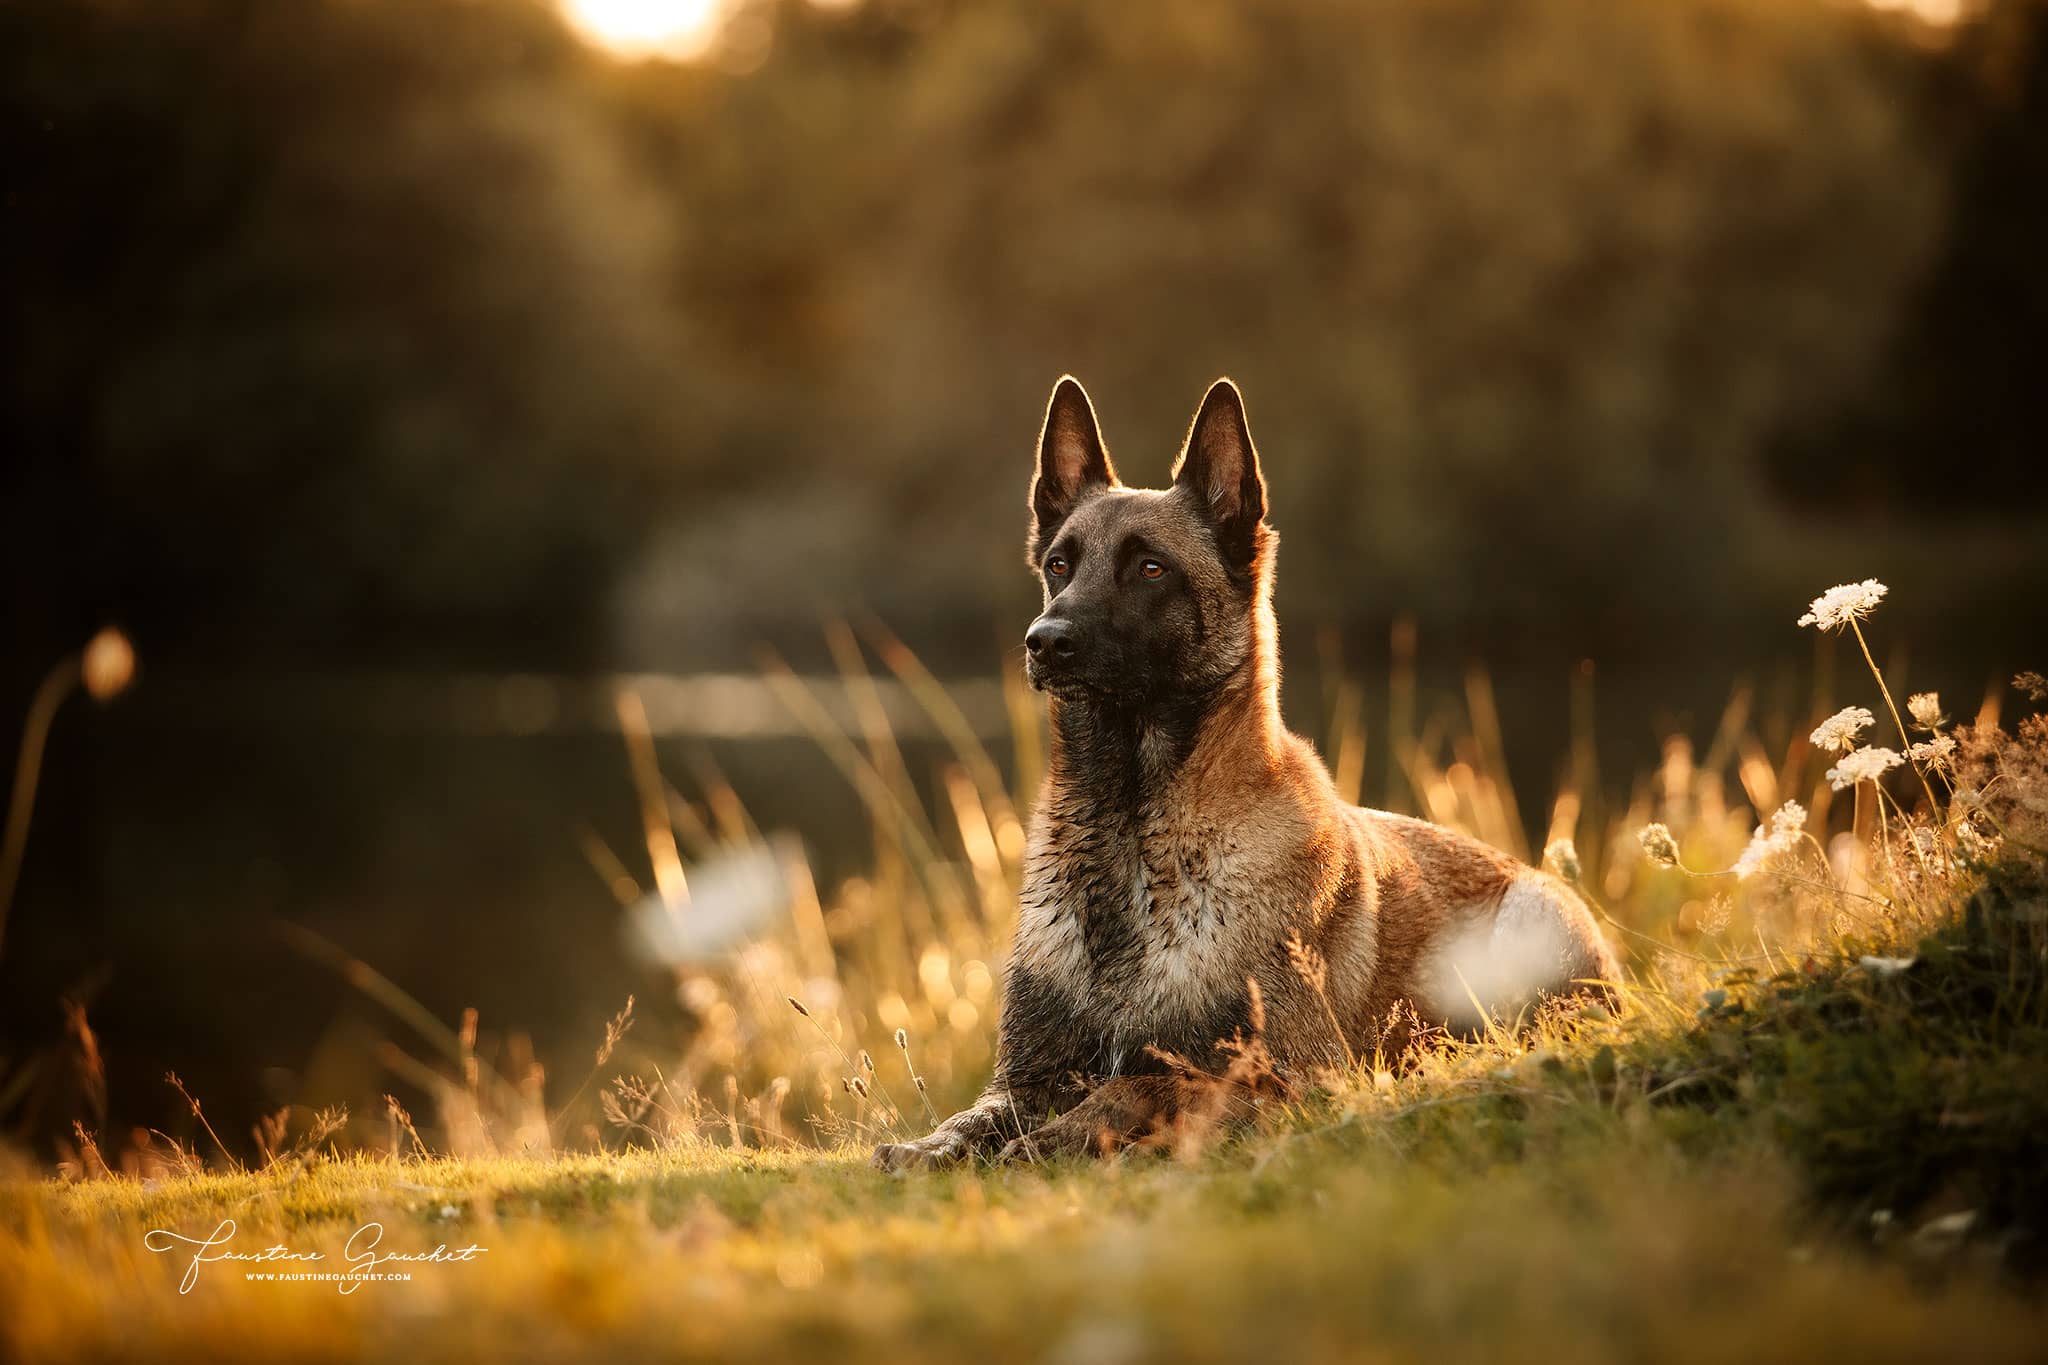 photo canine berger belge malinois coucher du soleil et étang Faustine Gauchet Photographe